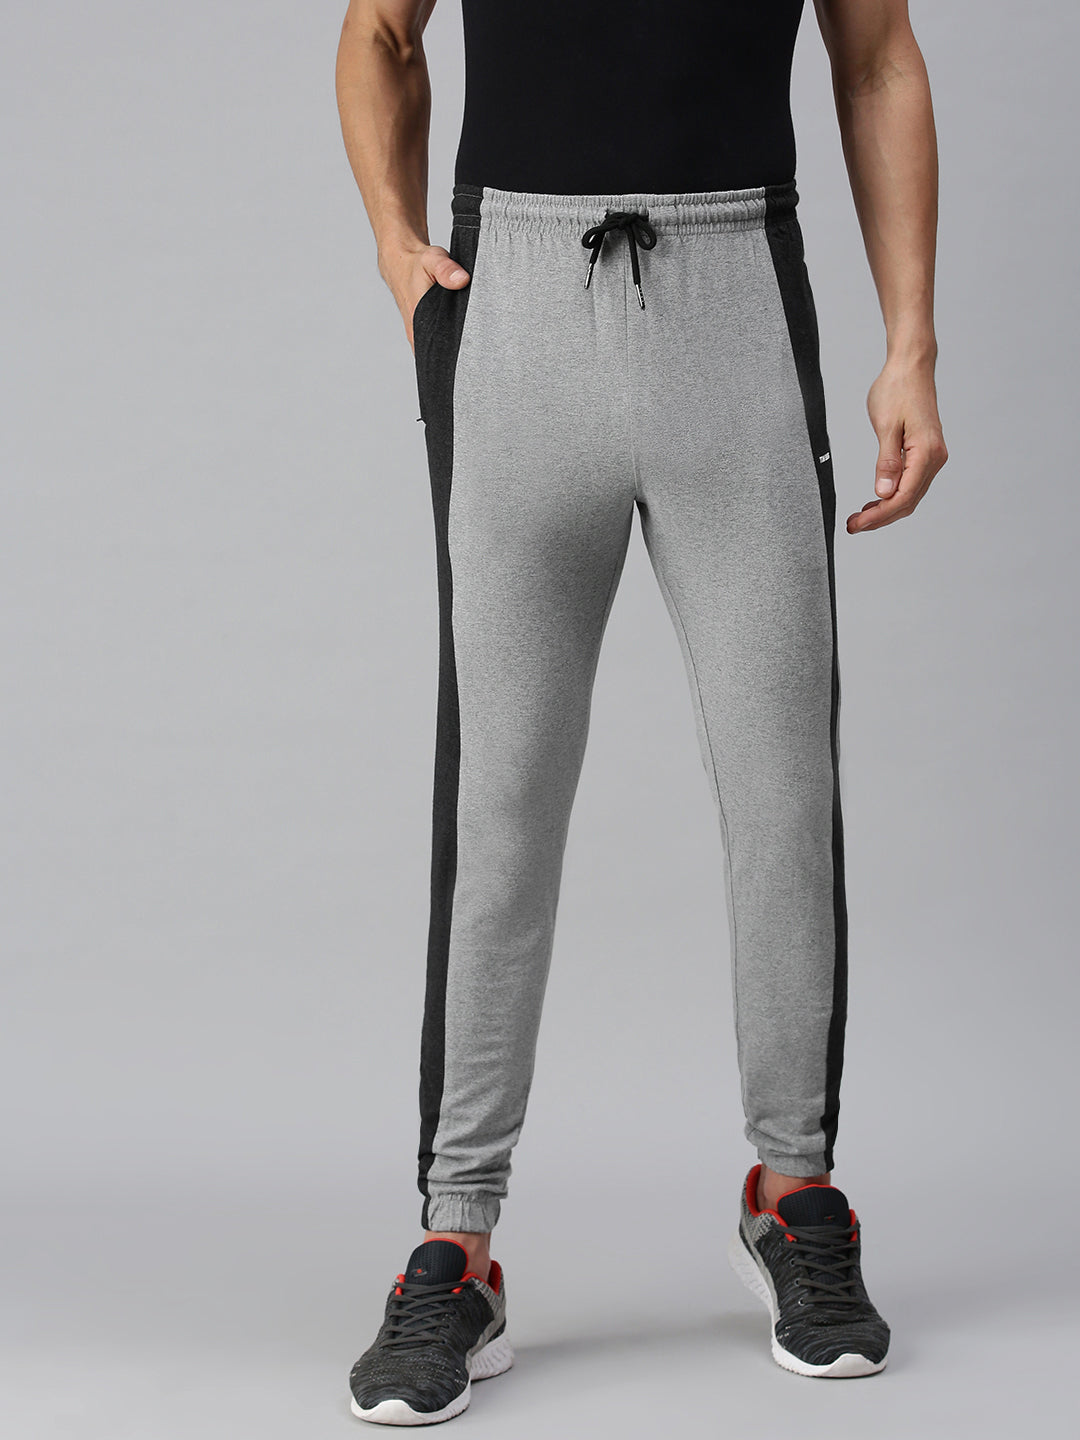 Tom Burg Premium Stylish Comfortable Track Pants - Grey (Black) - TOM BURG